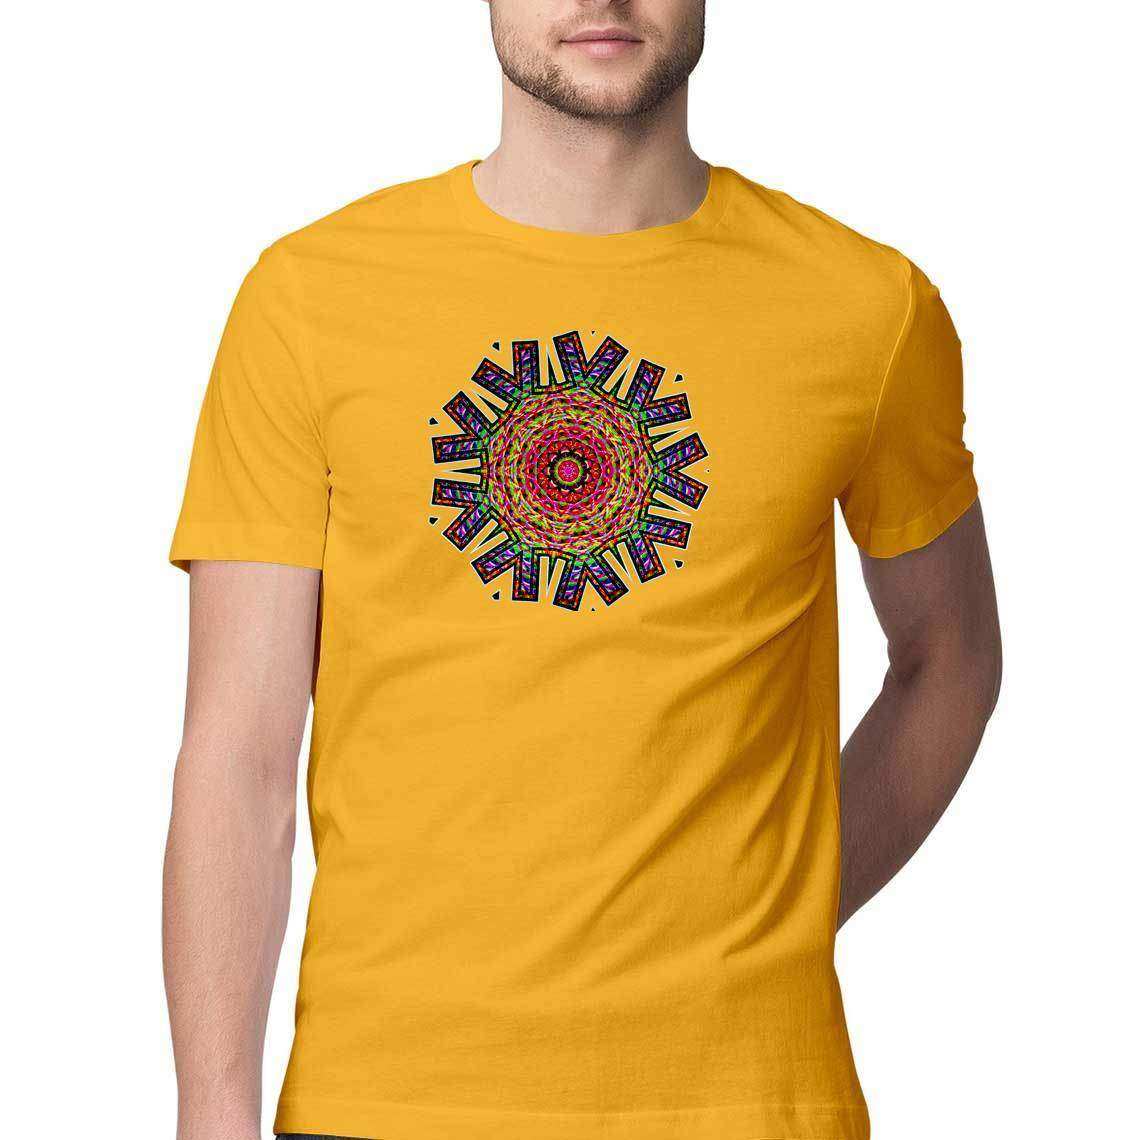 Eye of the Rambling Dragon Graphic Men's T-Shirt - CBD Store India